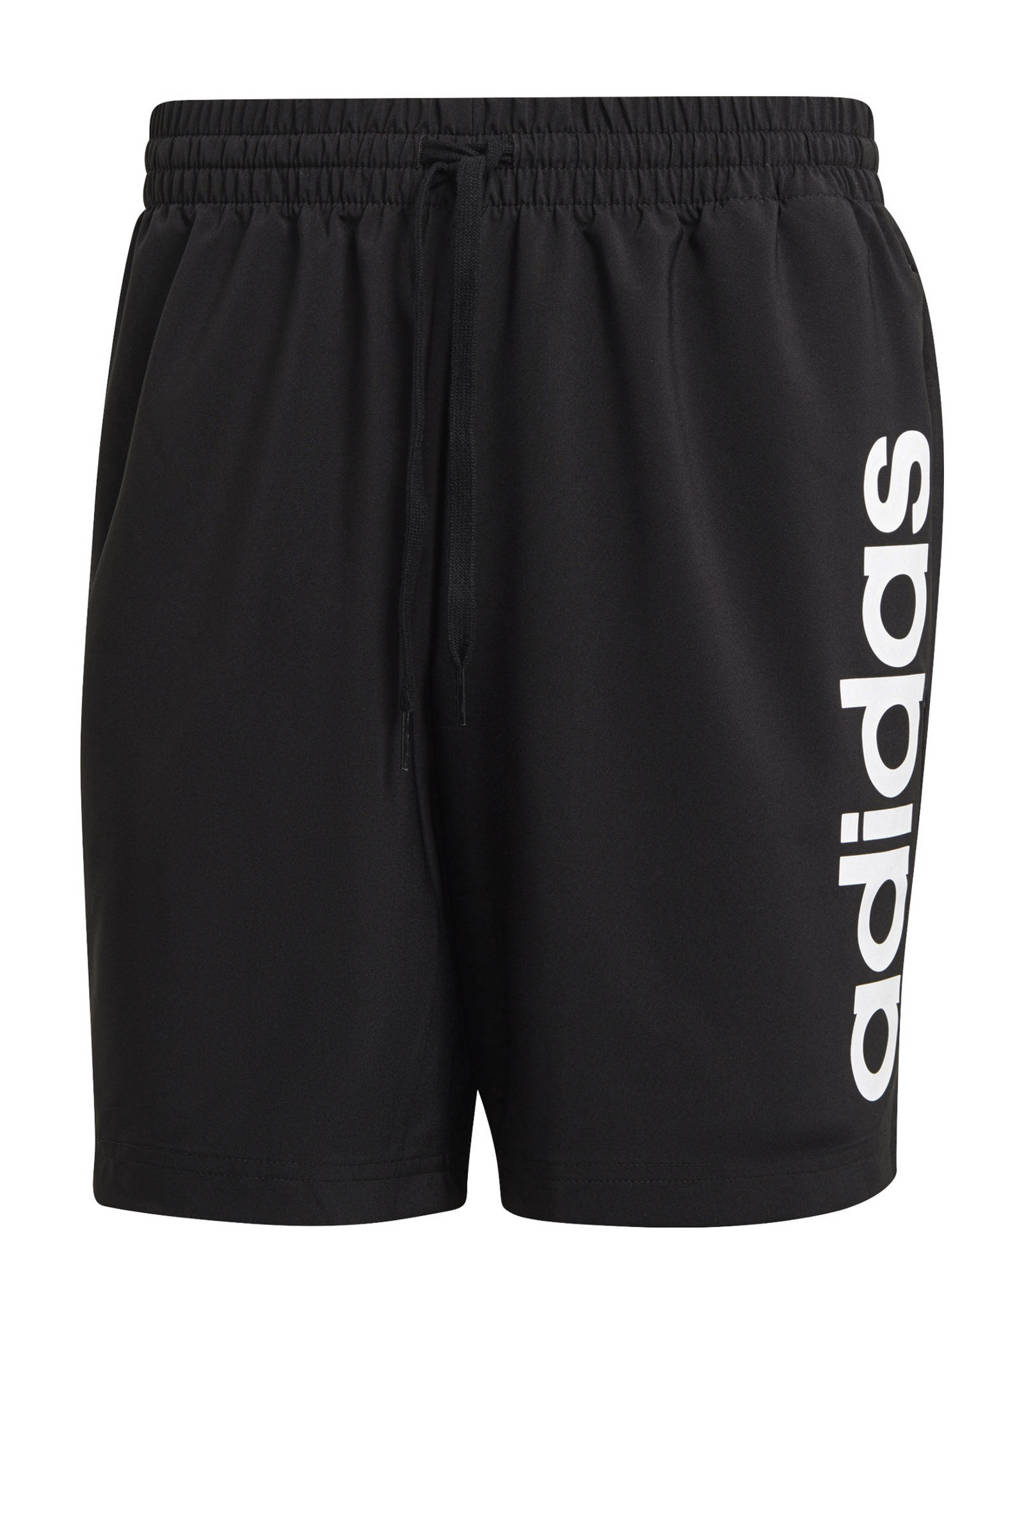 Zwart en witte heren adidas Performance sportshort van gerecycled polyester met regular fit, regular waist en logo dessin